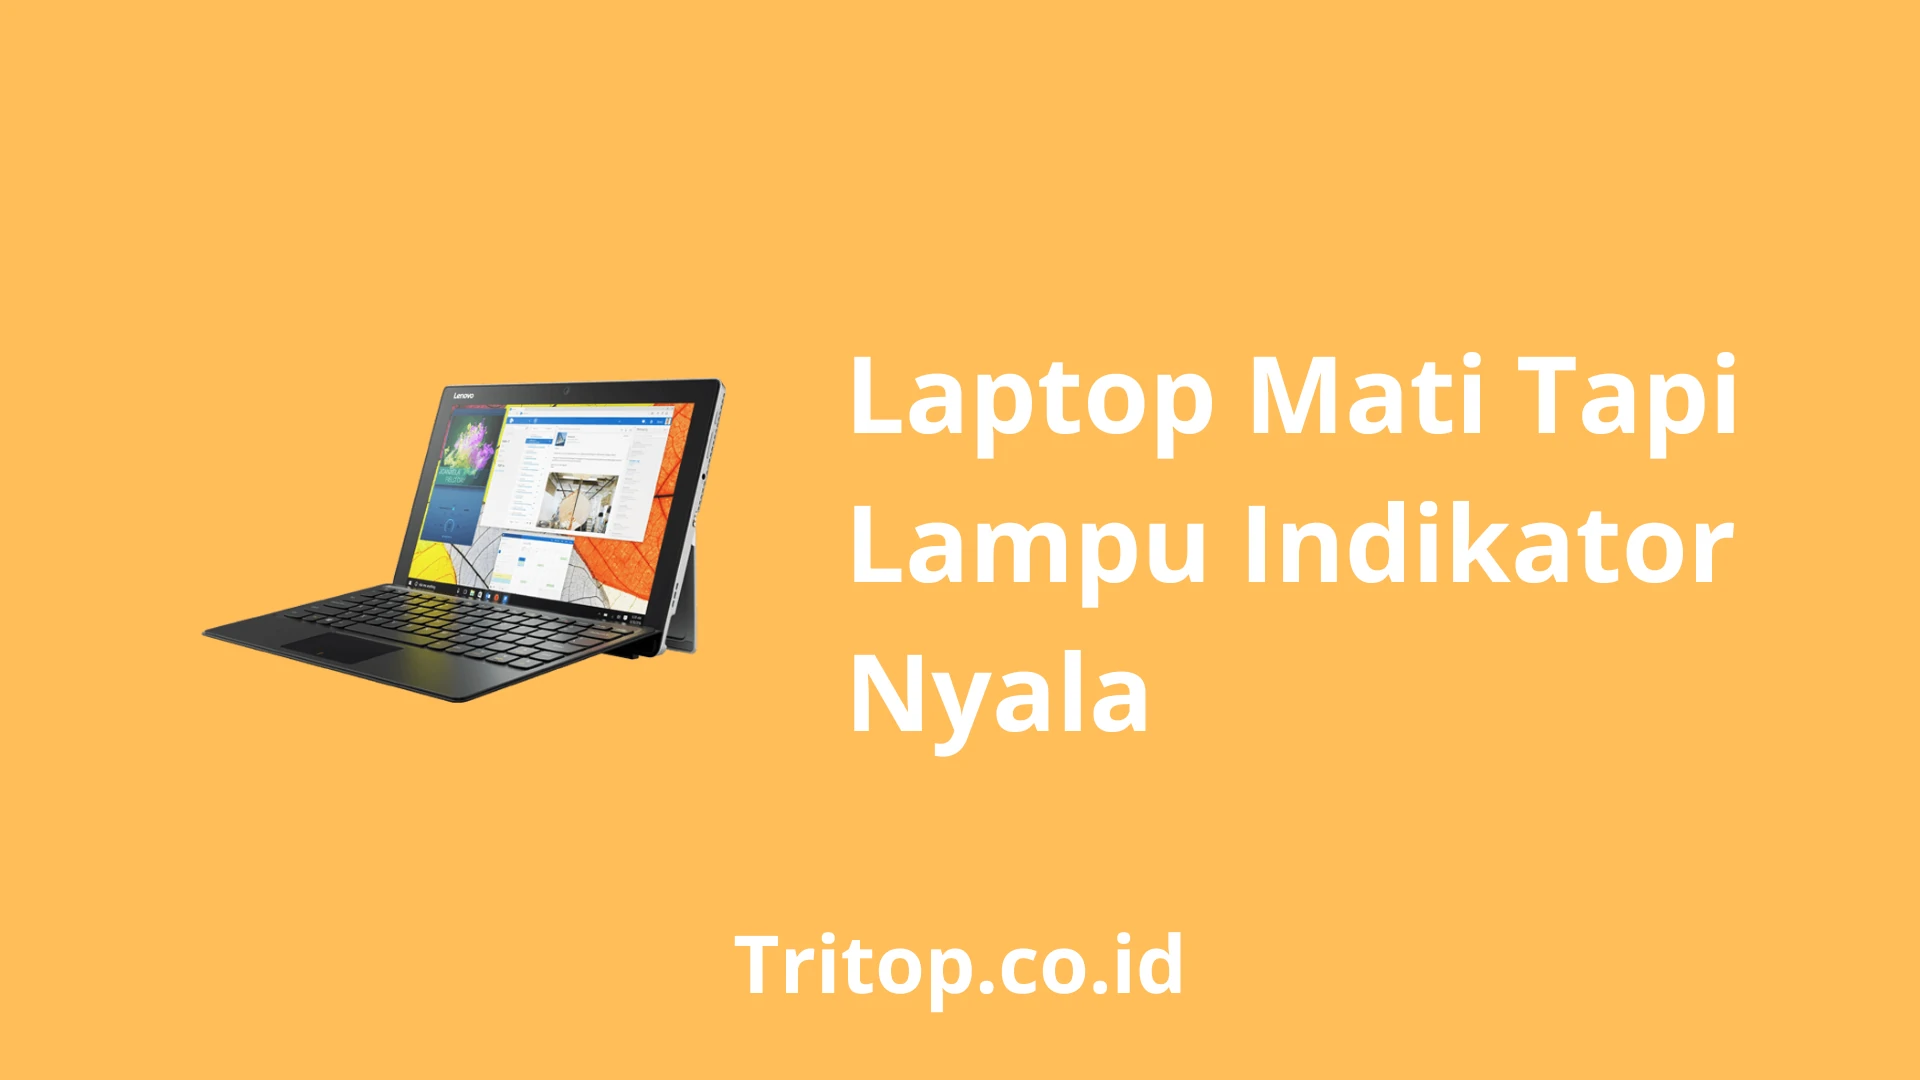 Cara Mengatasi Laptop Mati Tapi Lampu Indikator Nyala Tritop.co.id